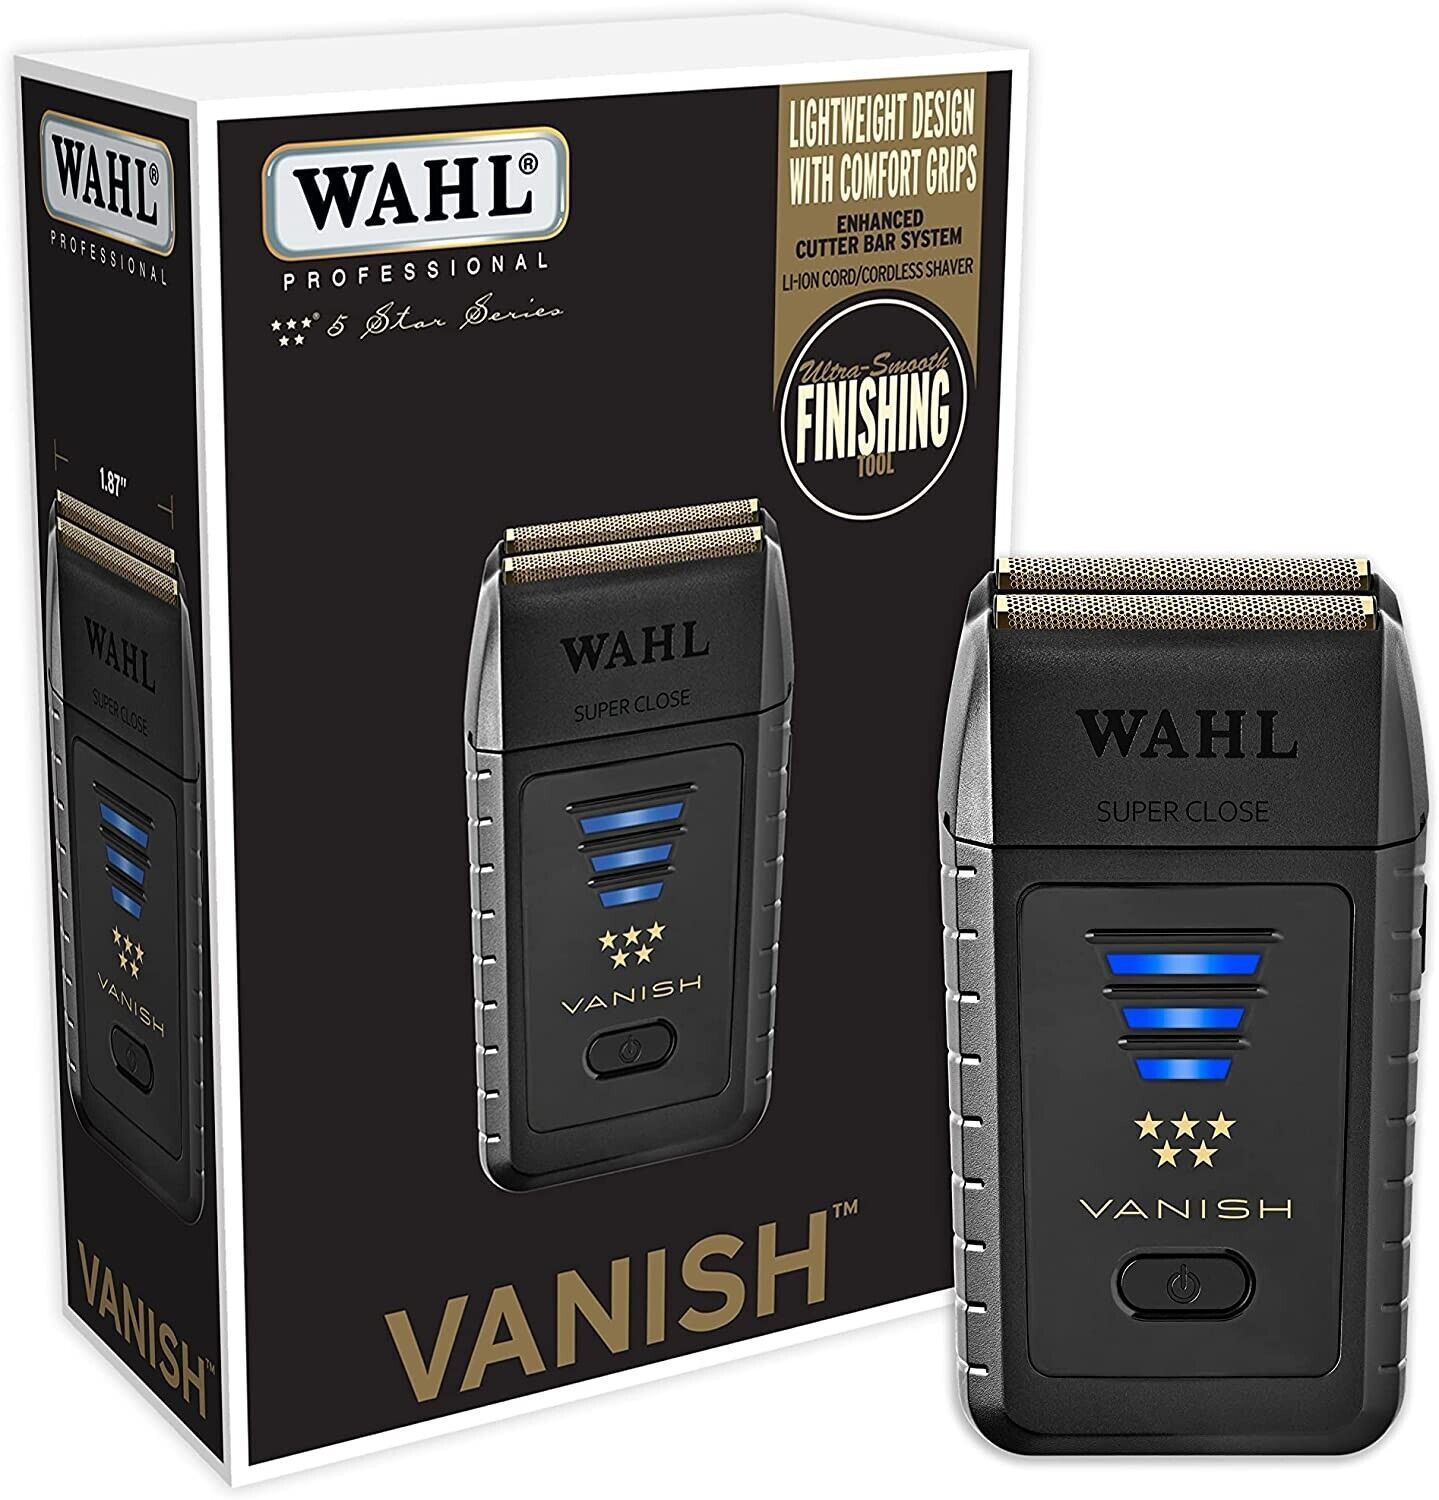 US正規品 Wahl 5 Star Series Vanish shaver8173-700デュアル電圧